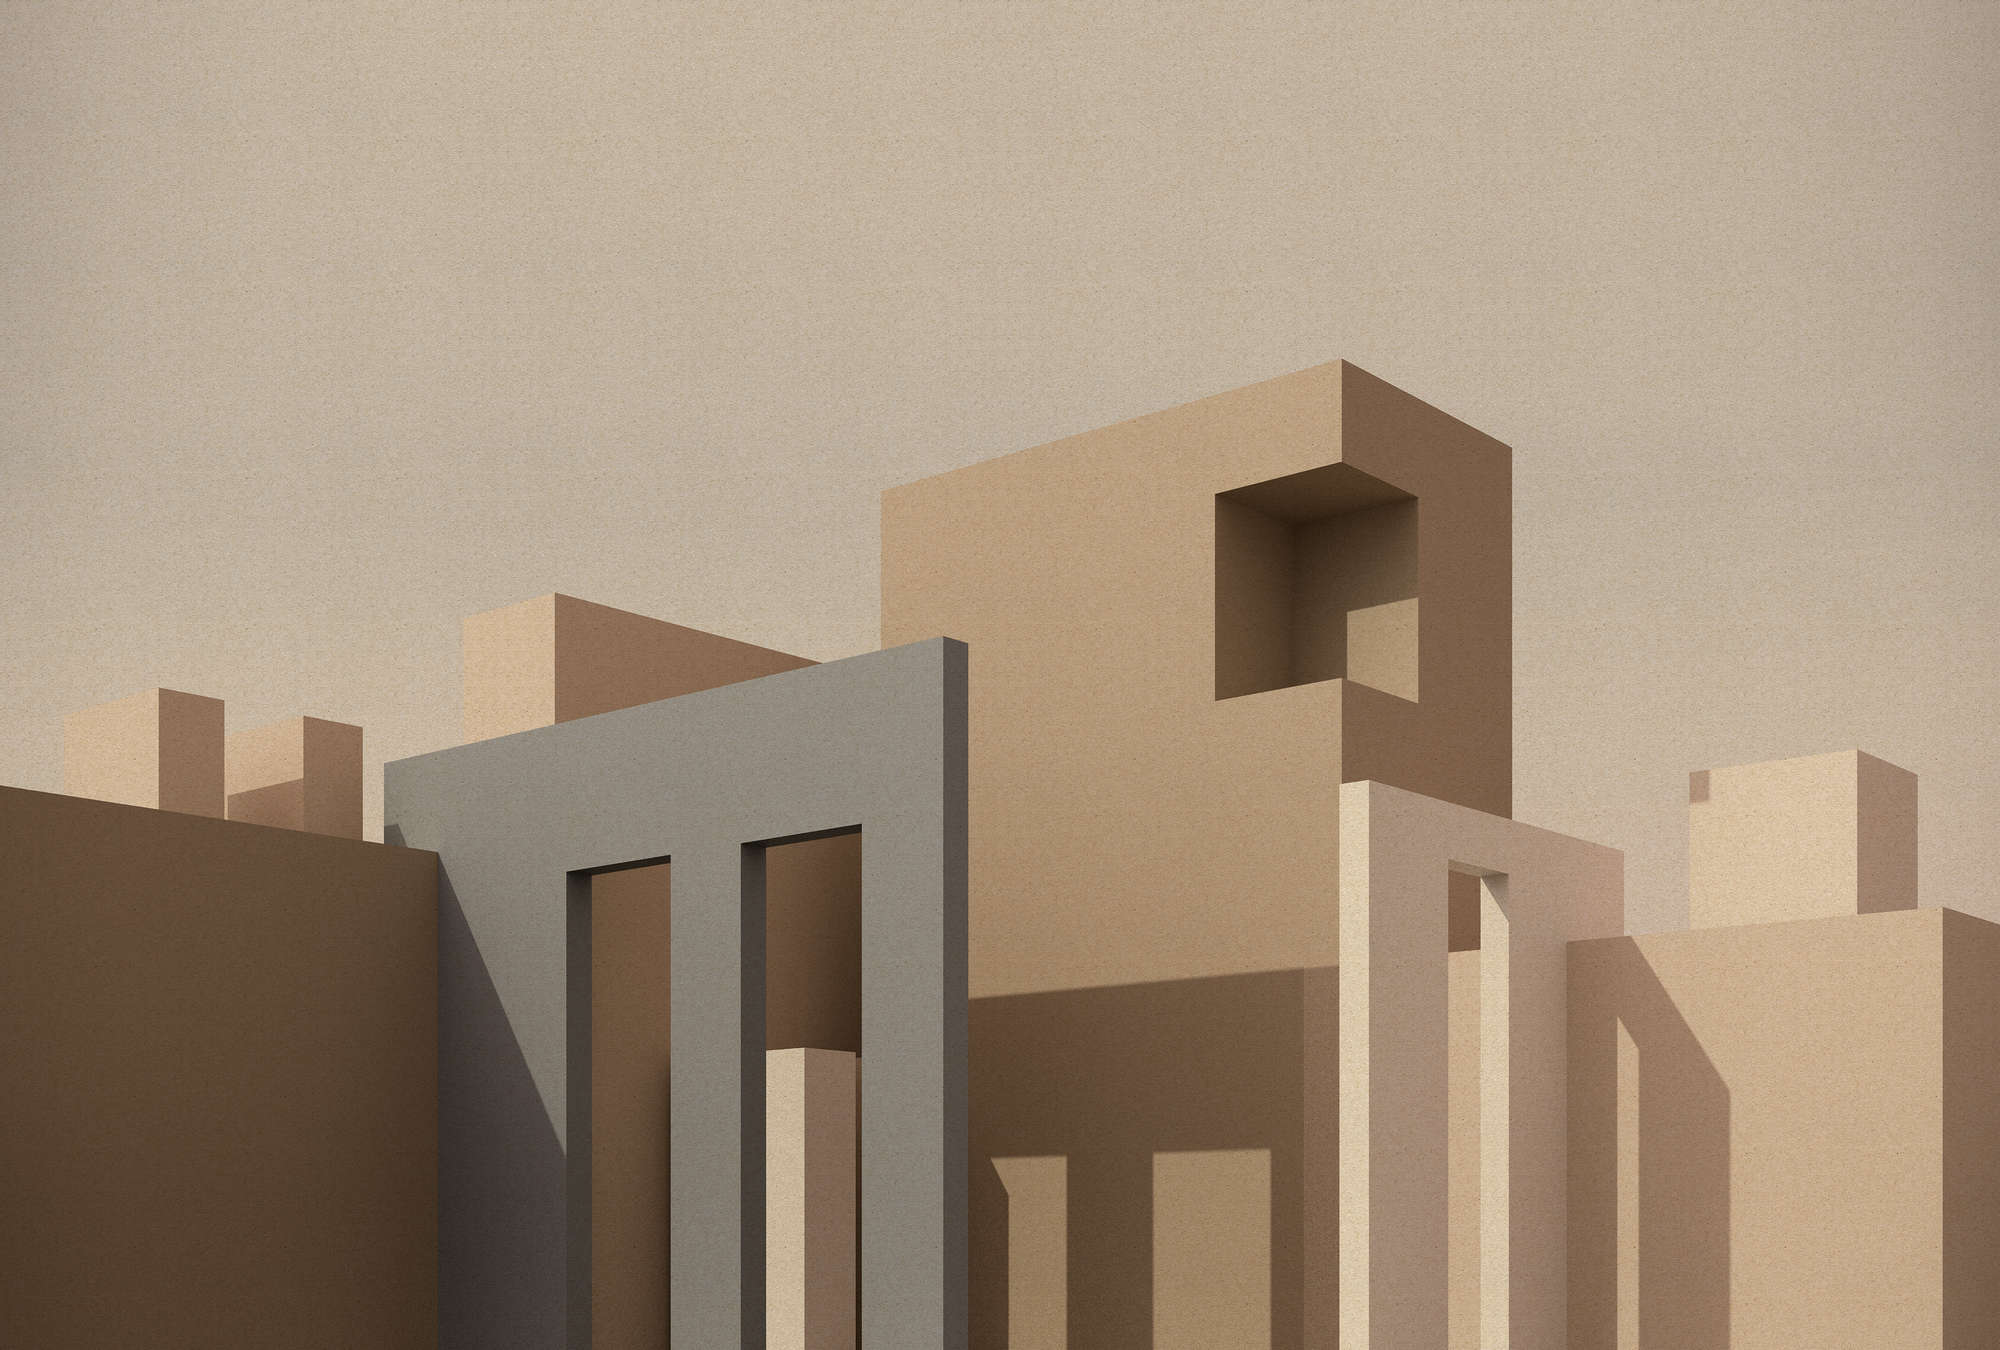             Tangier 1 - Architecture Cube Design Wallpaper in Beige & Grey
        